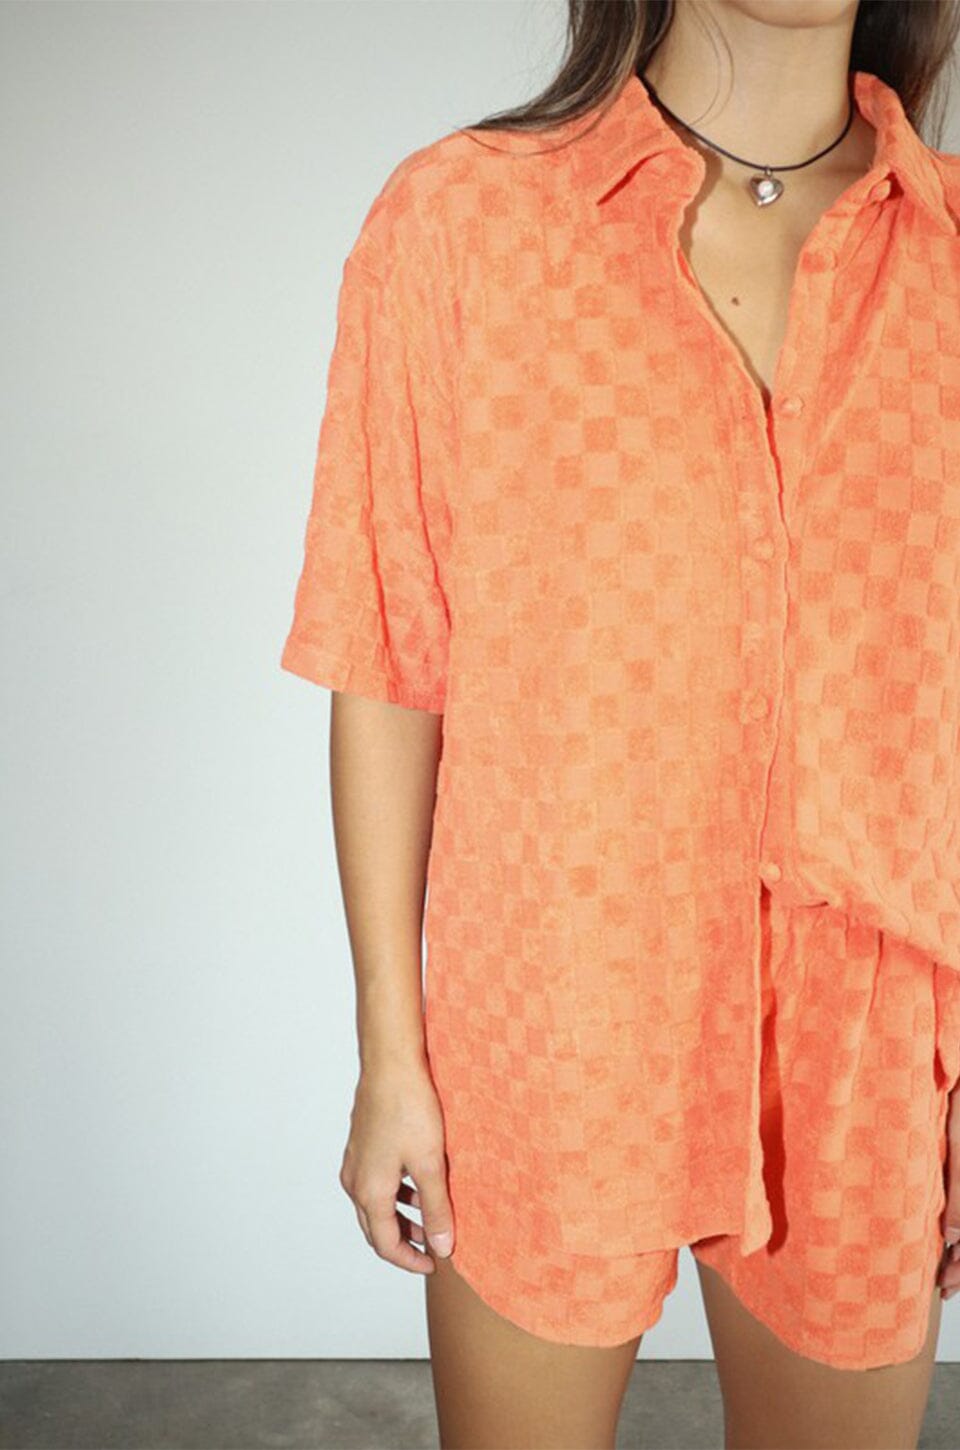 Checkered Terry Knit Shirt - Tangerine